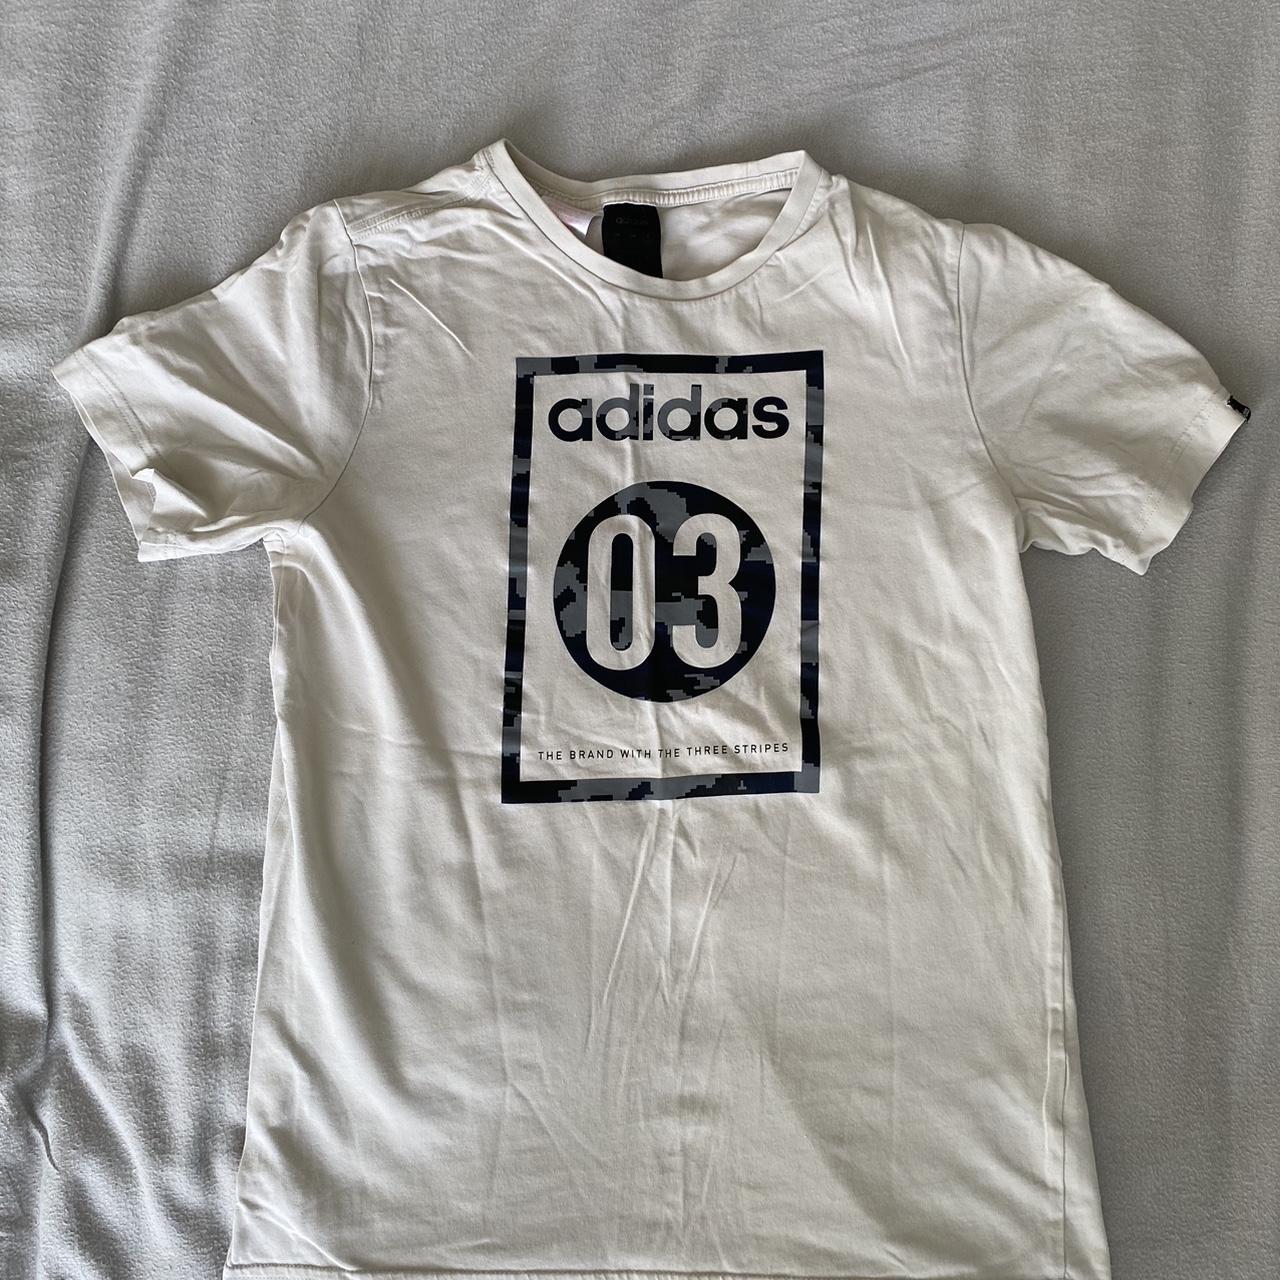 13-14 yrs old white Adidas t-shirt - Depop